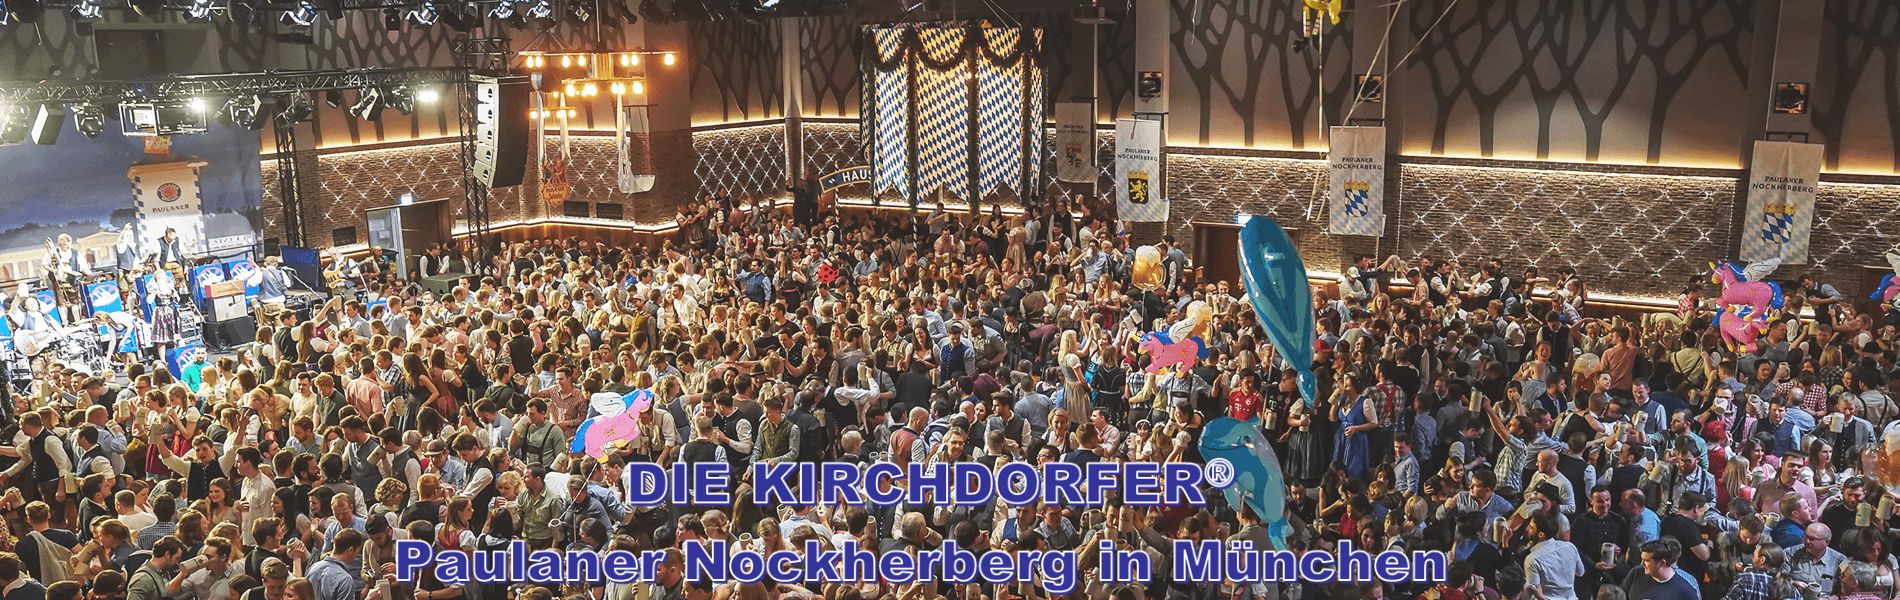 Oktoberfestkapelle Die Kirchdorfer® - Oktoberfestband - Oktoberfestband München - DIE KIRCHDORFER®